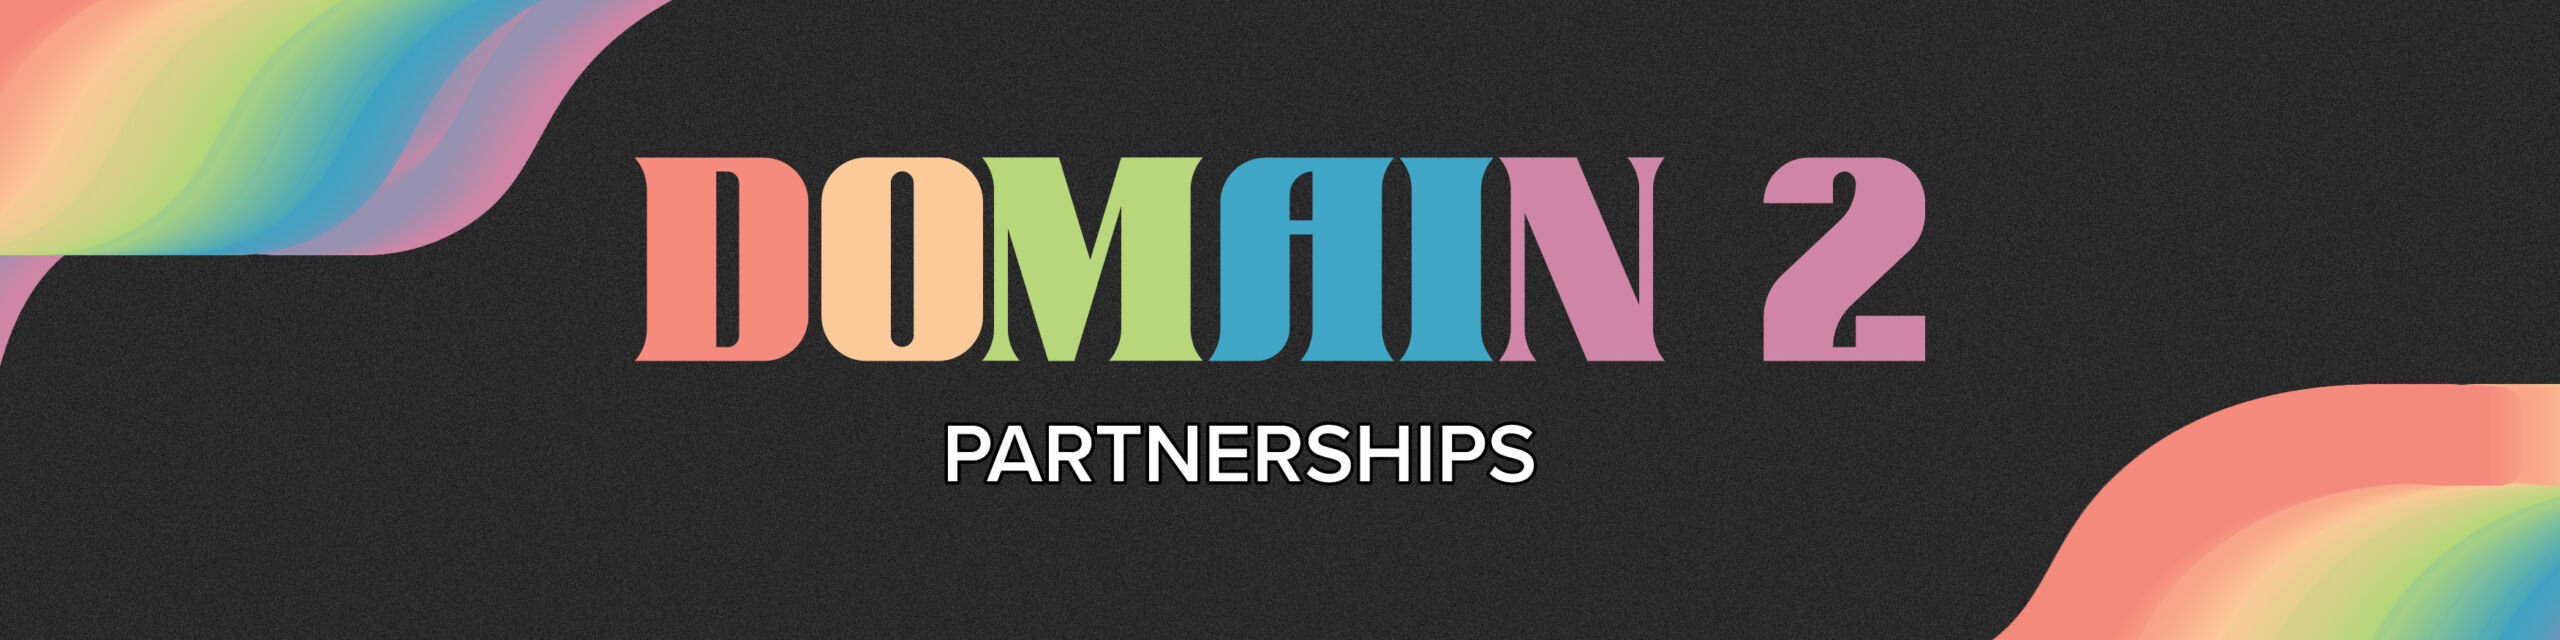 Domain 2 - Partnerships